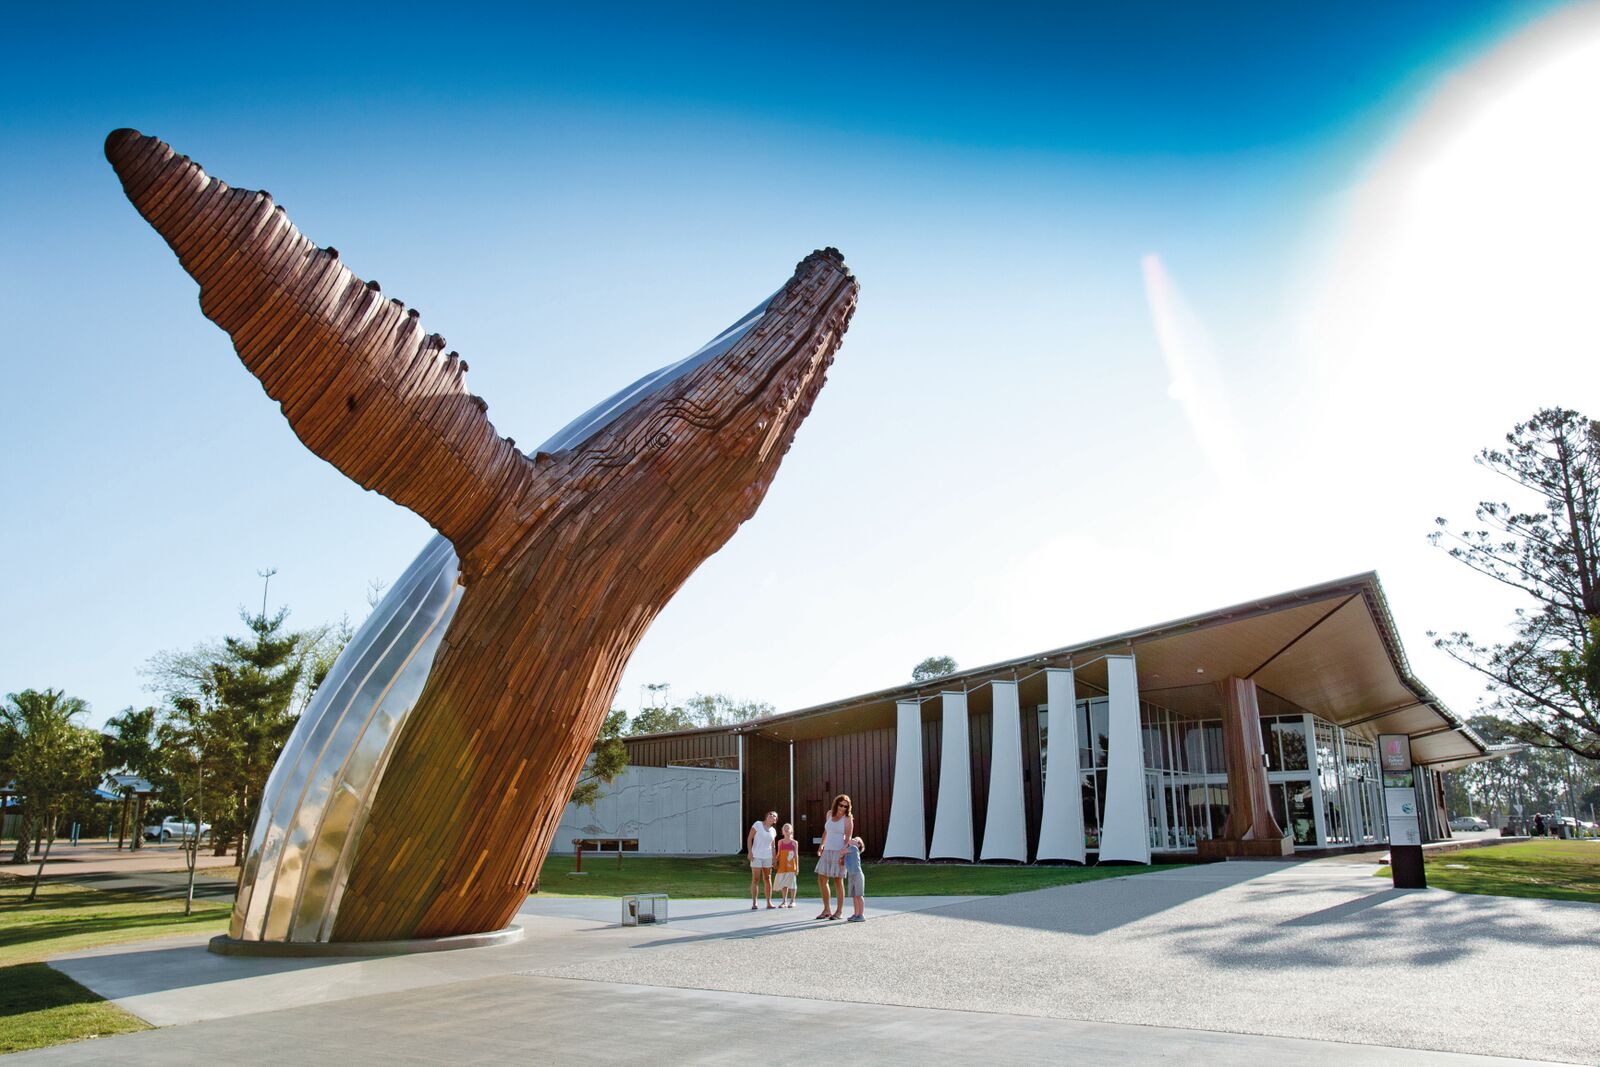 Hervey-bay-whale-sculpture